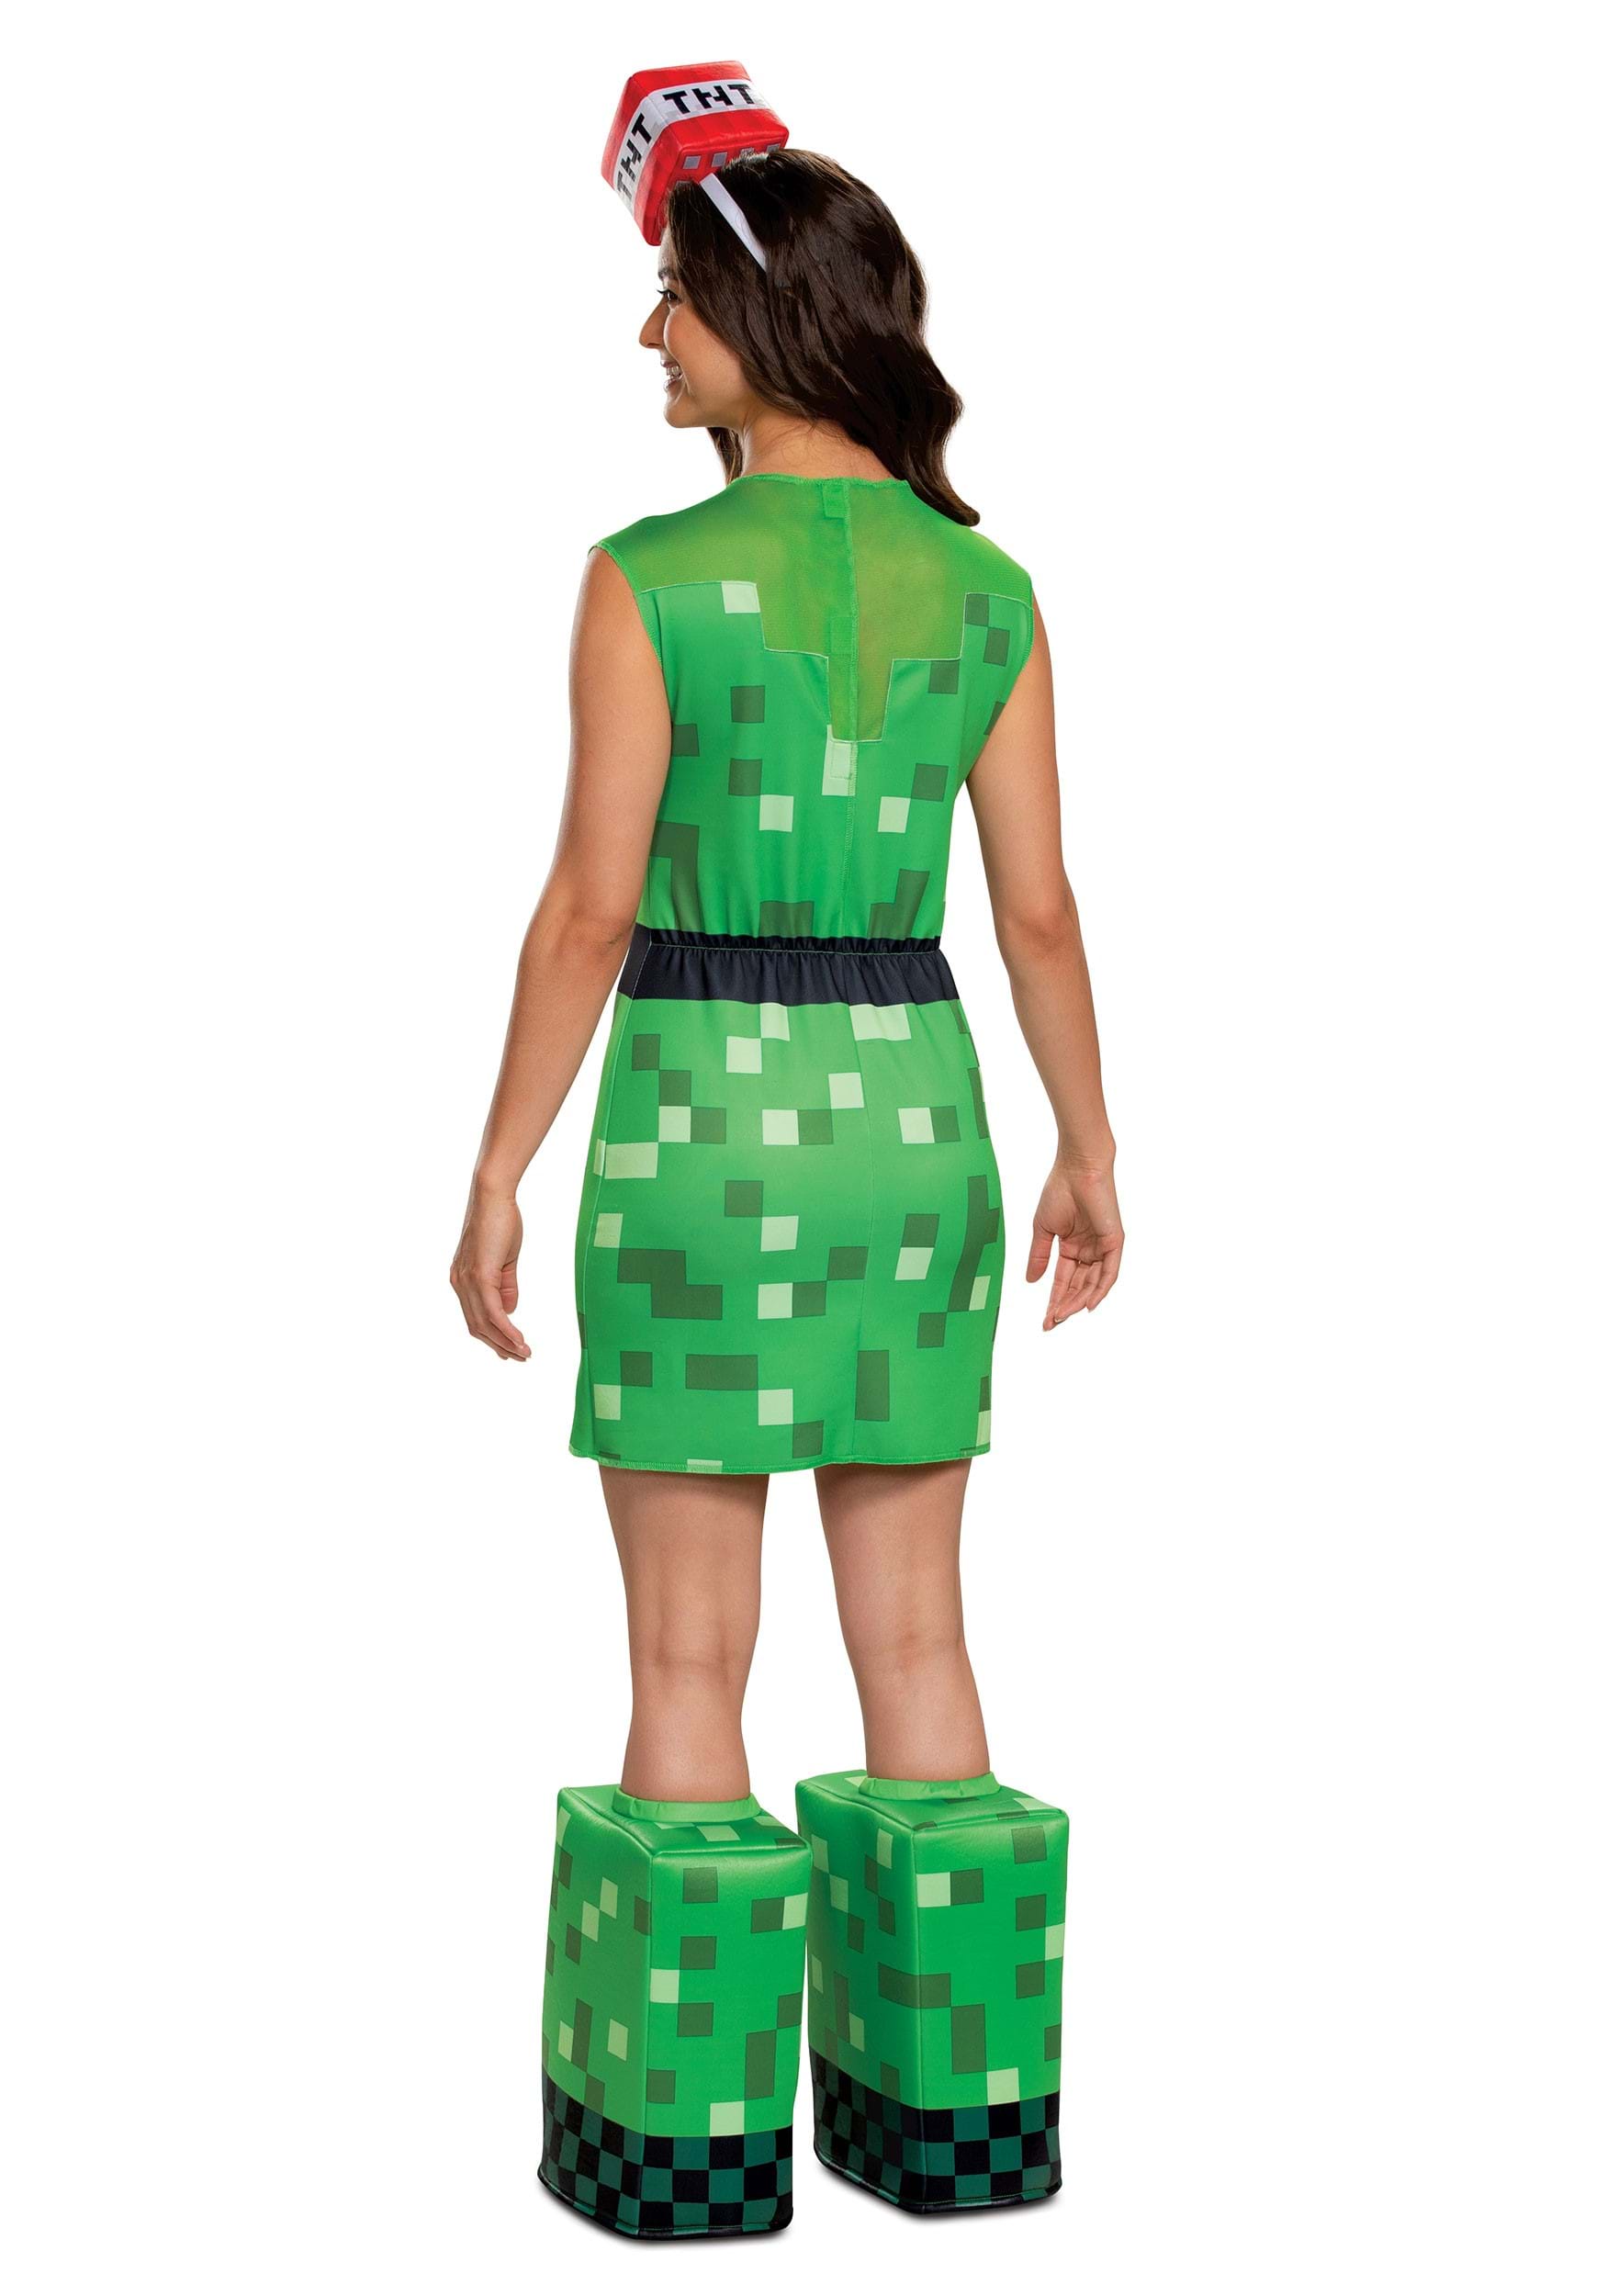 Womens Minecraft  Creeper Fancy Dress Costume